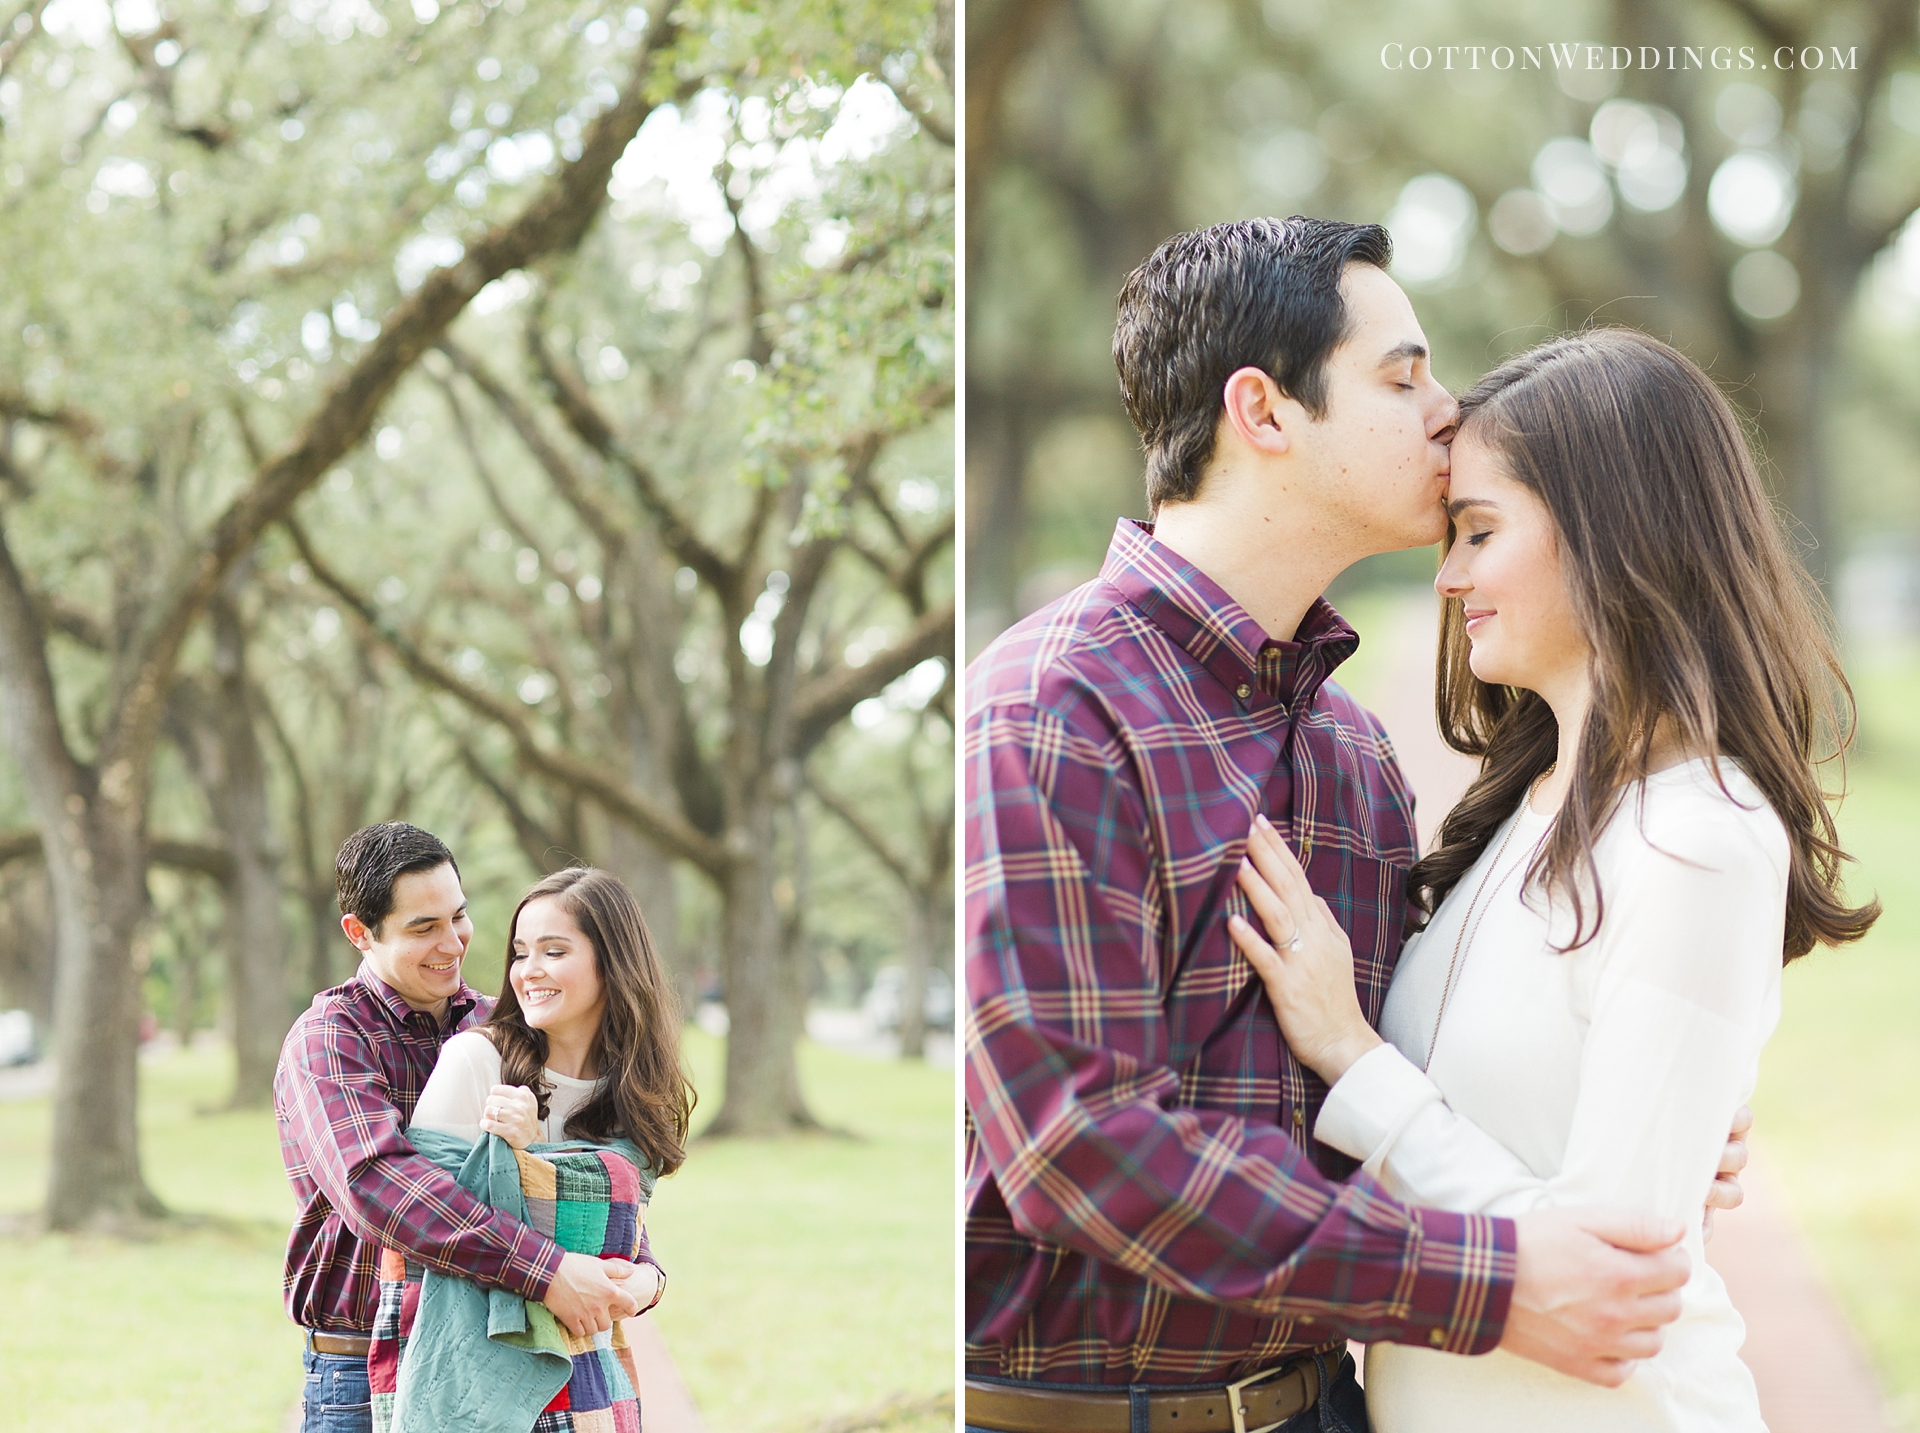 Belltower Houston Engagement Photography - Cotton Weddings